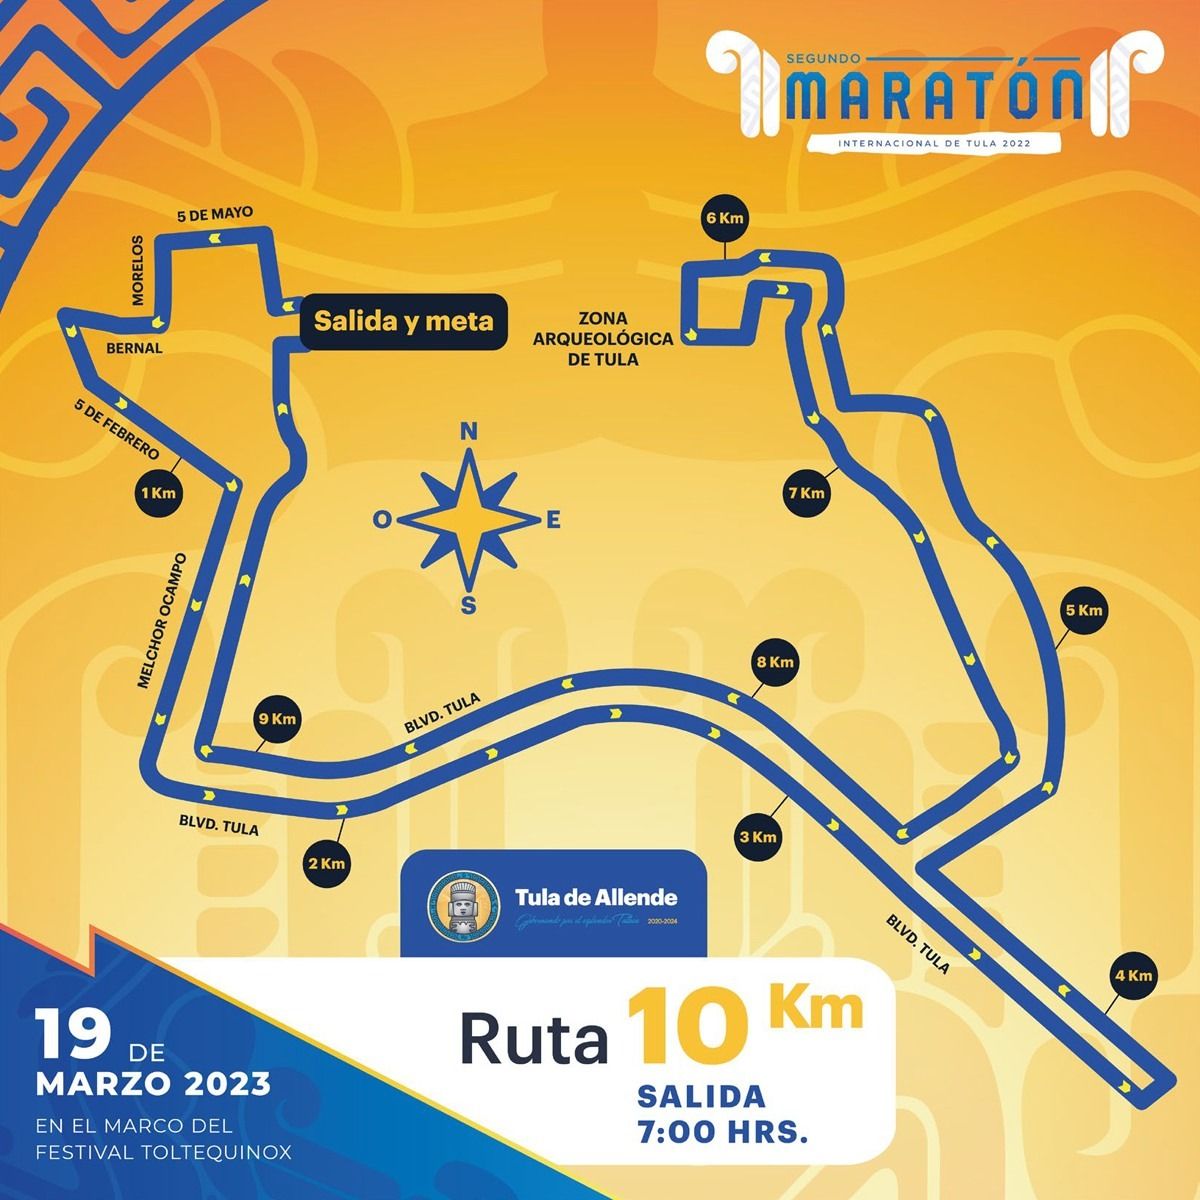 Todo listo para el Segundo Maratón Internacional Tula 2023
